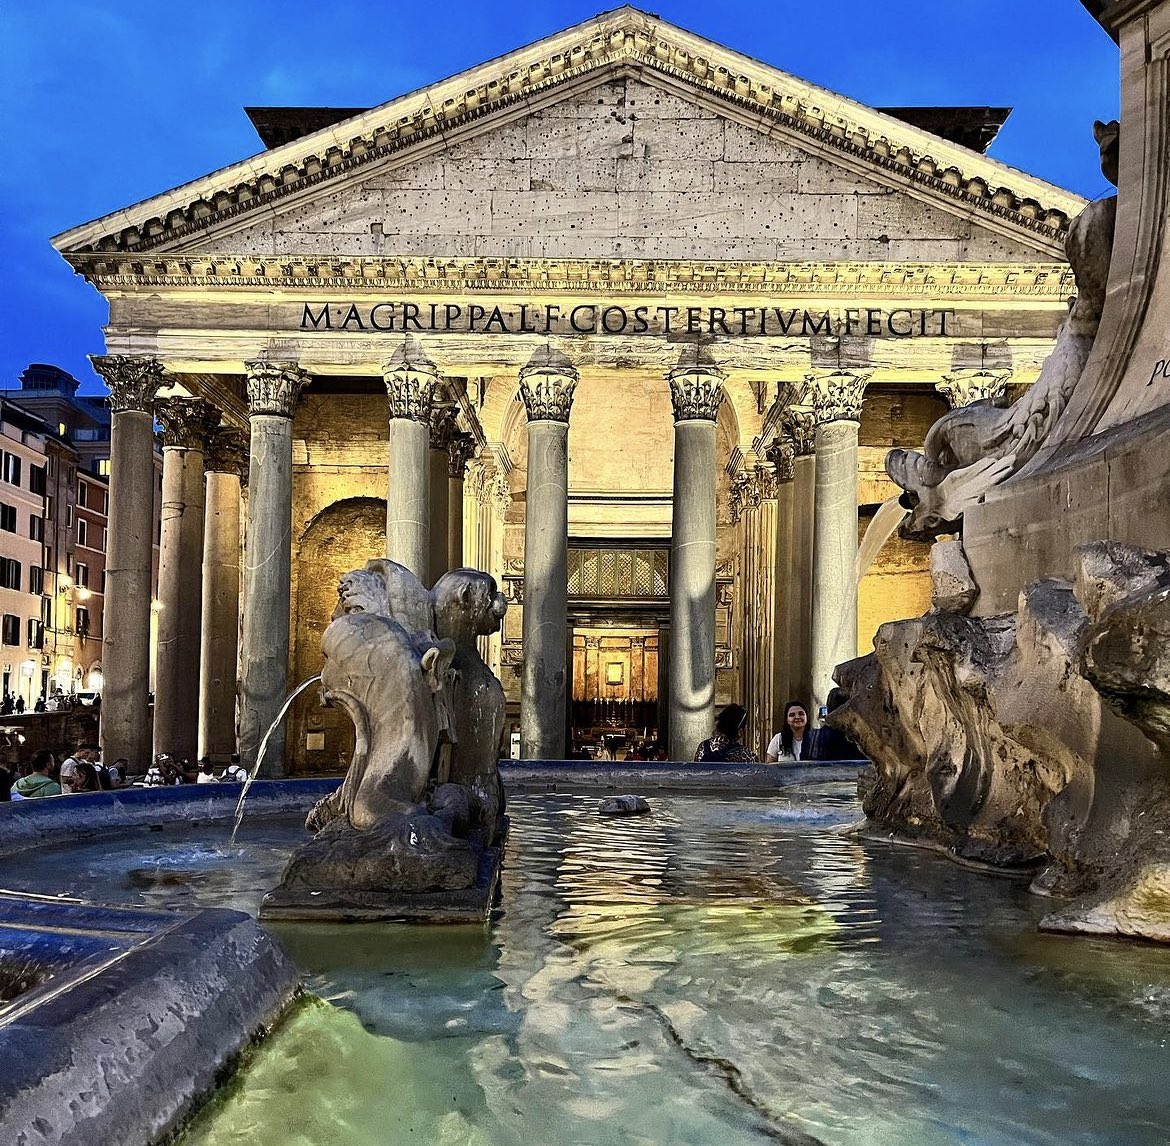 ROMA AETERNA💚🩶❤️
#Pantheon #Roma #romeisus